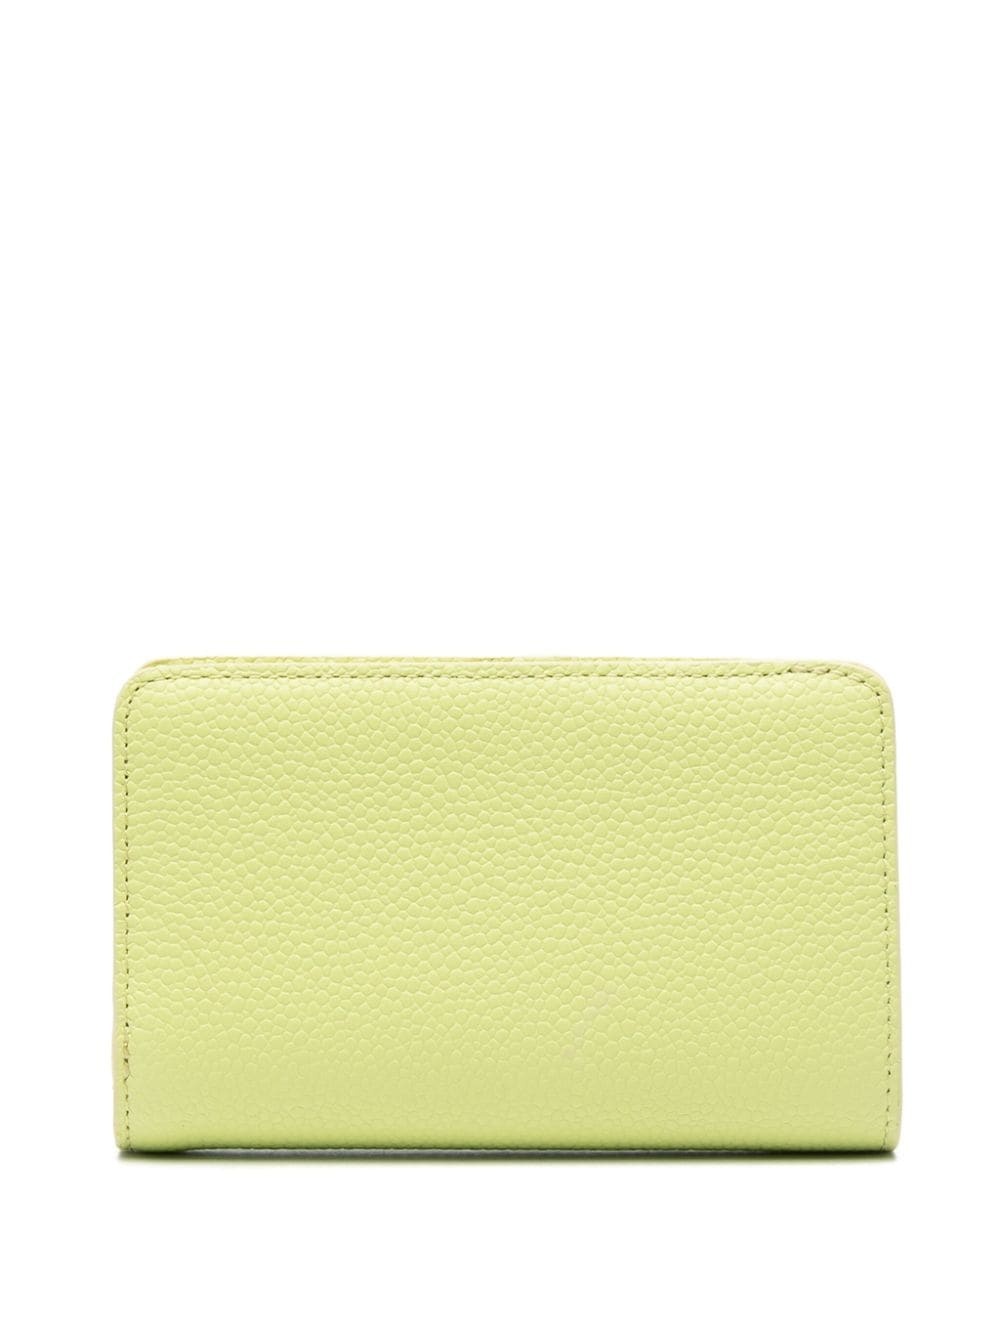 Ninon leather wallet - 2